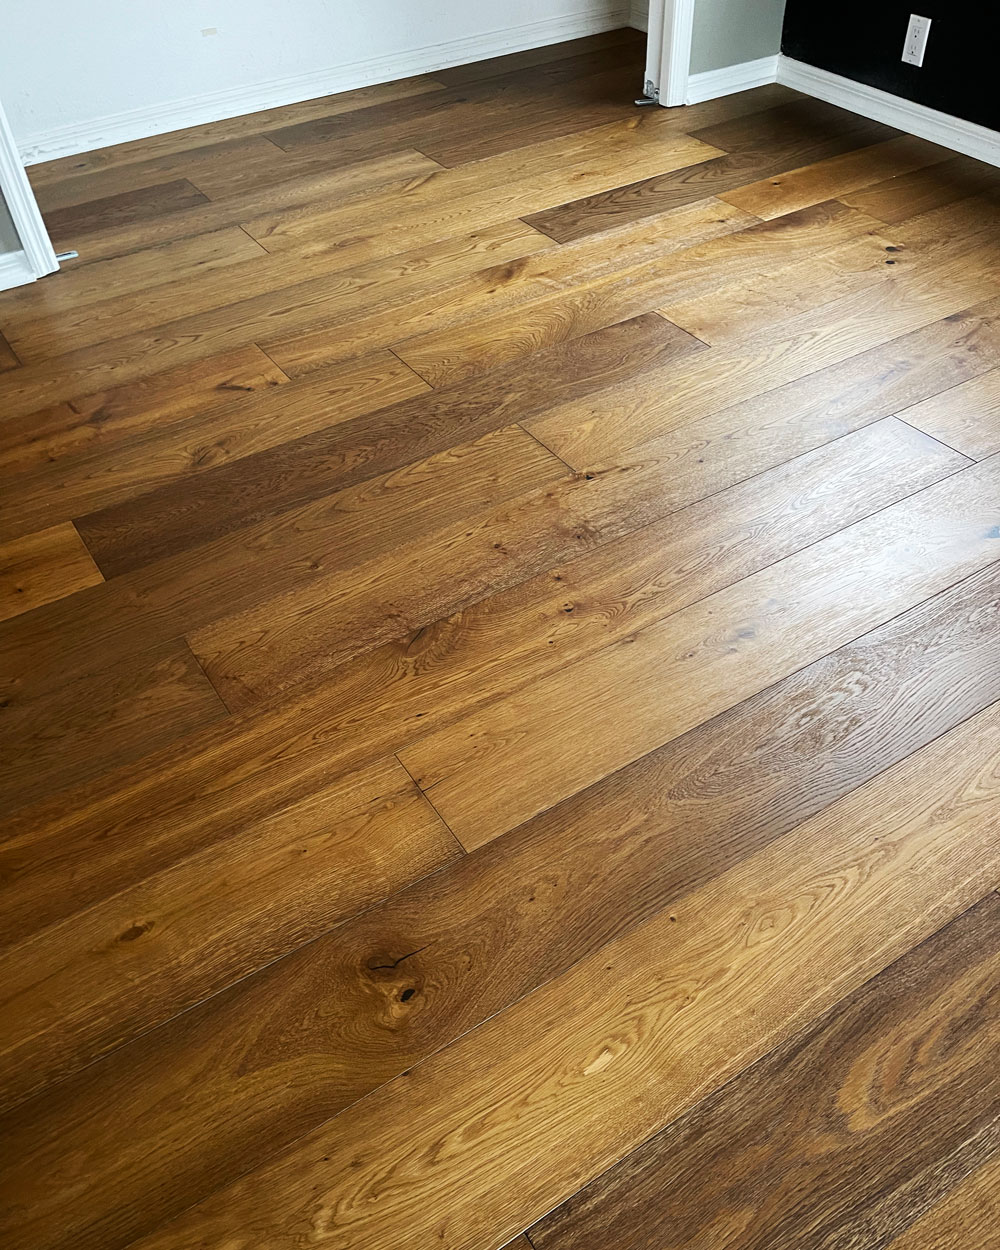 Classic brown hardwood floors